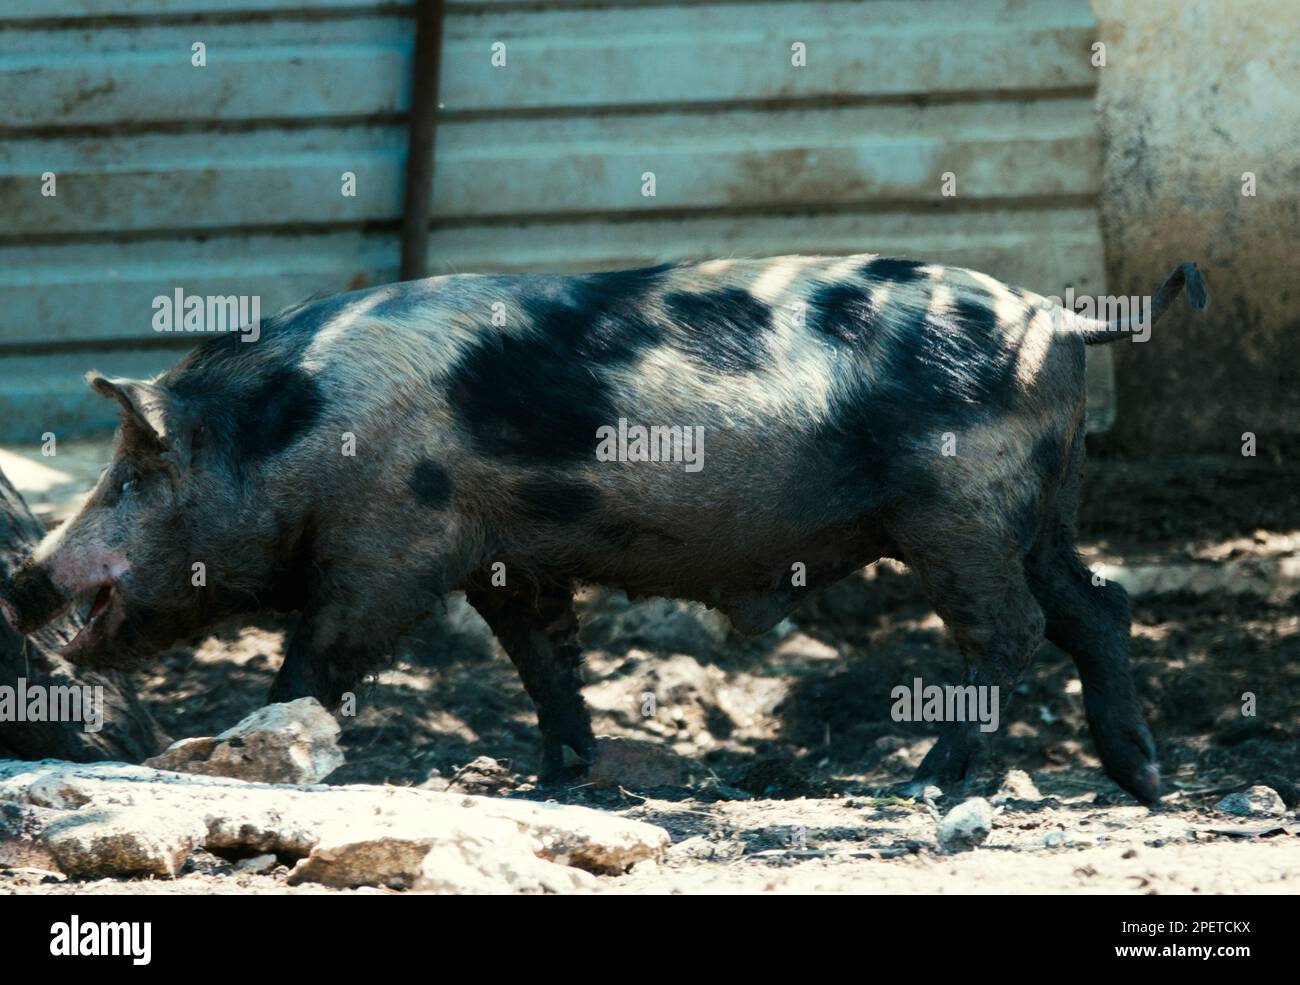 Swine husbandry. Ukrainian steppe pock-marked breed of pigs. Based on the Ukrainian white breed of rough build Stock Photo